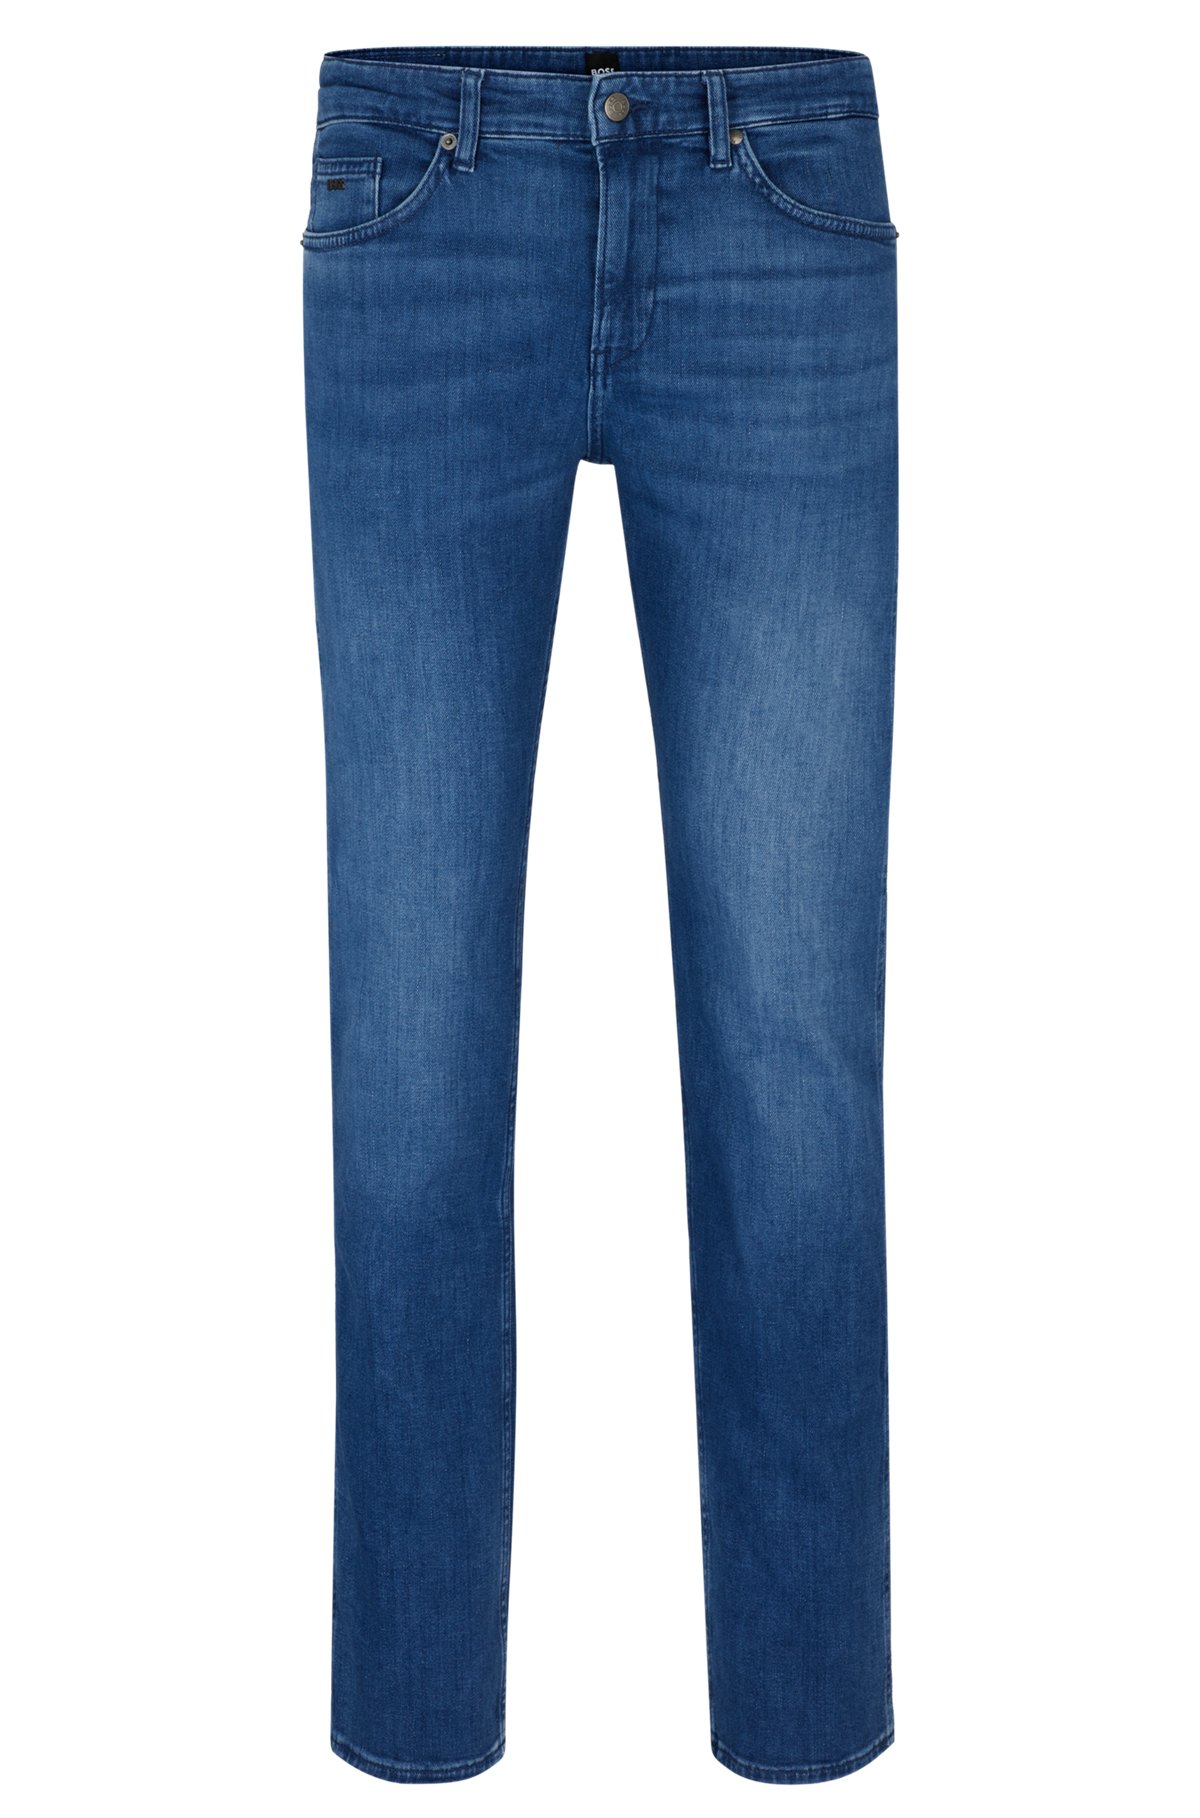 BOSS - Slim-fit jeans in blue Italian cashmere-touch denim